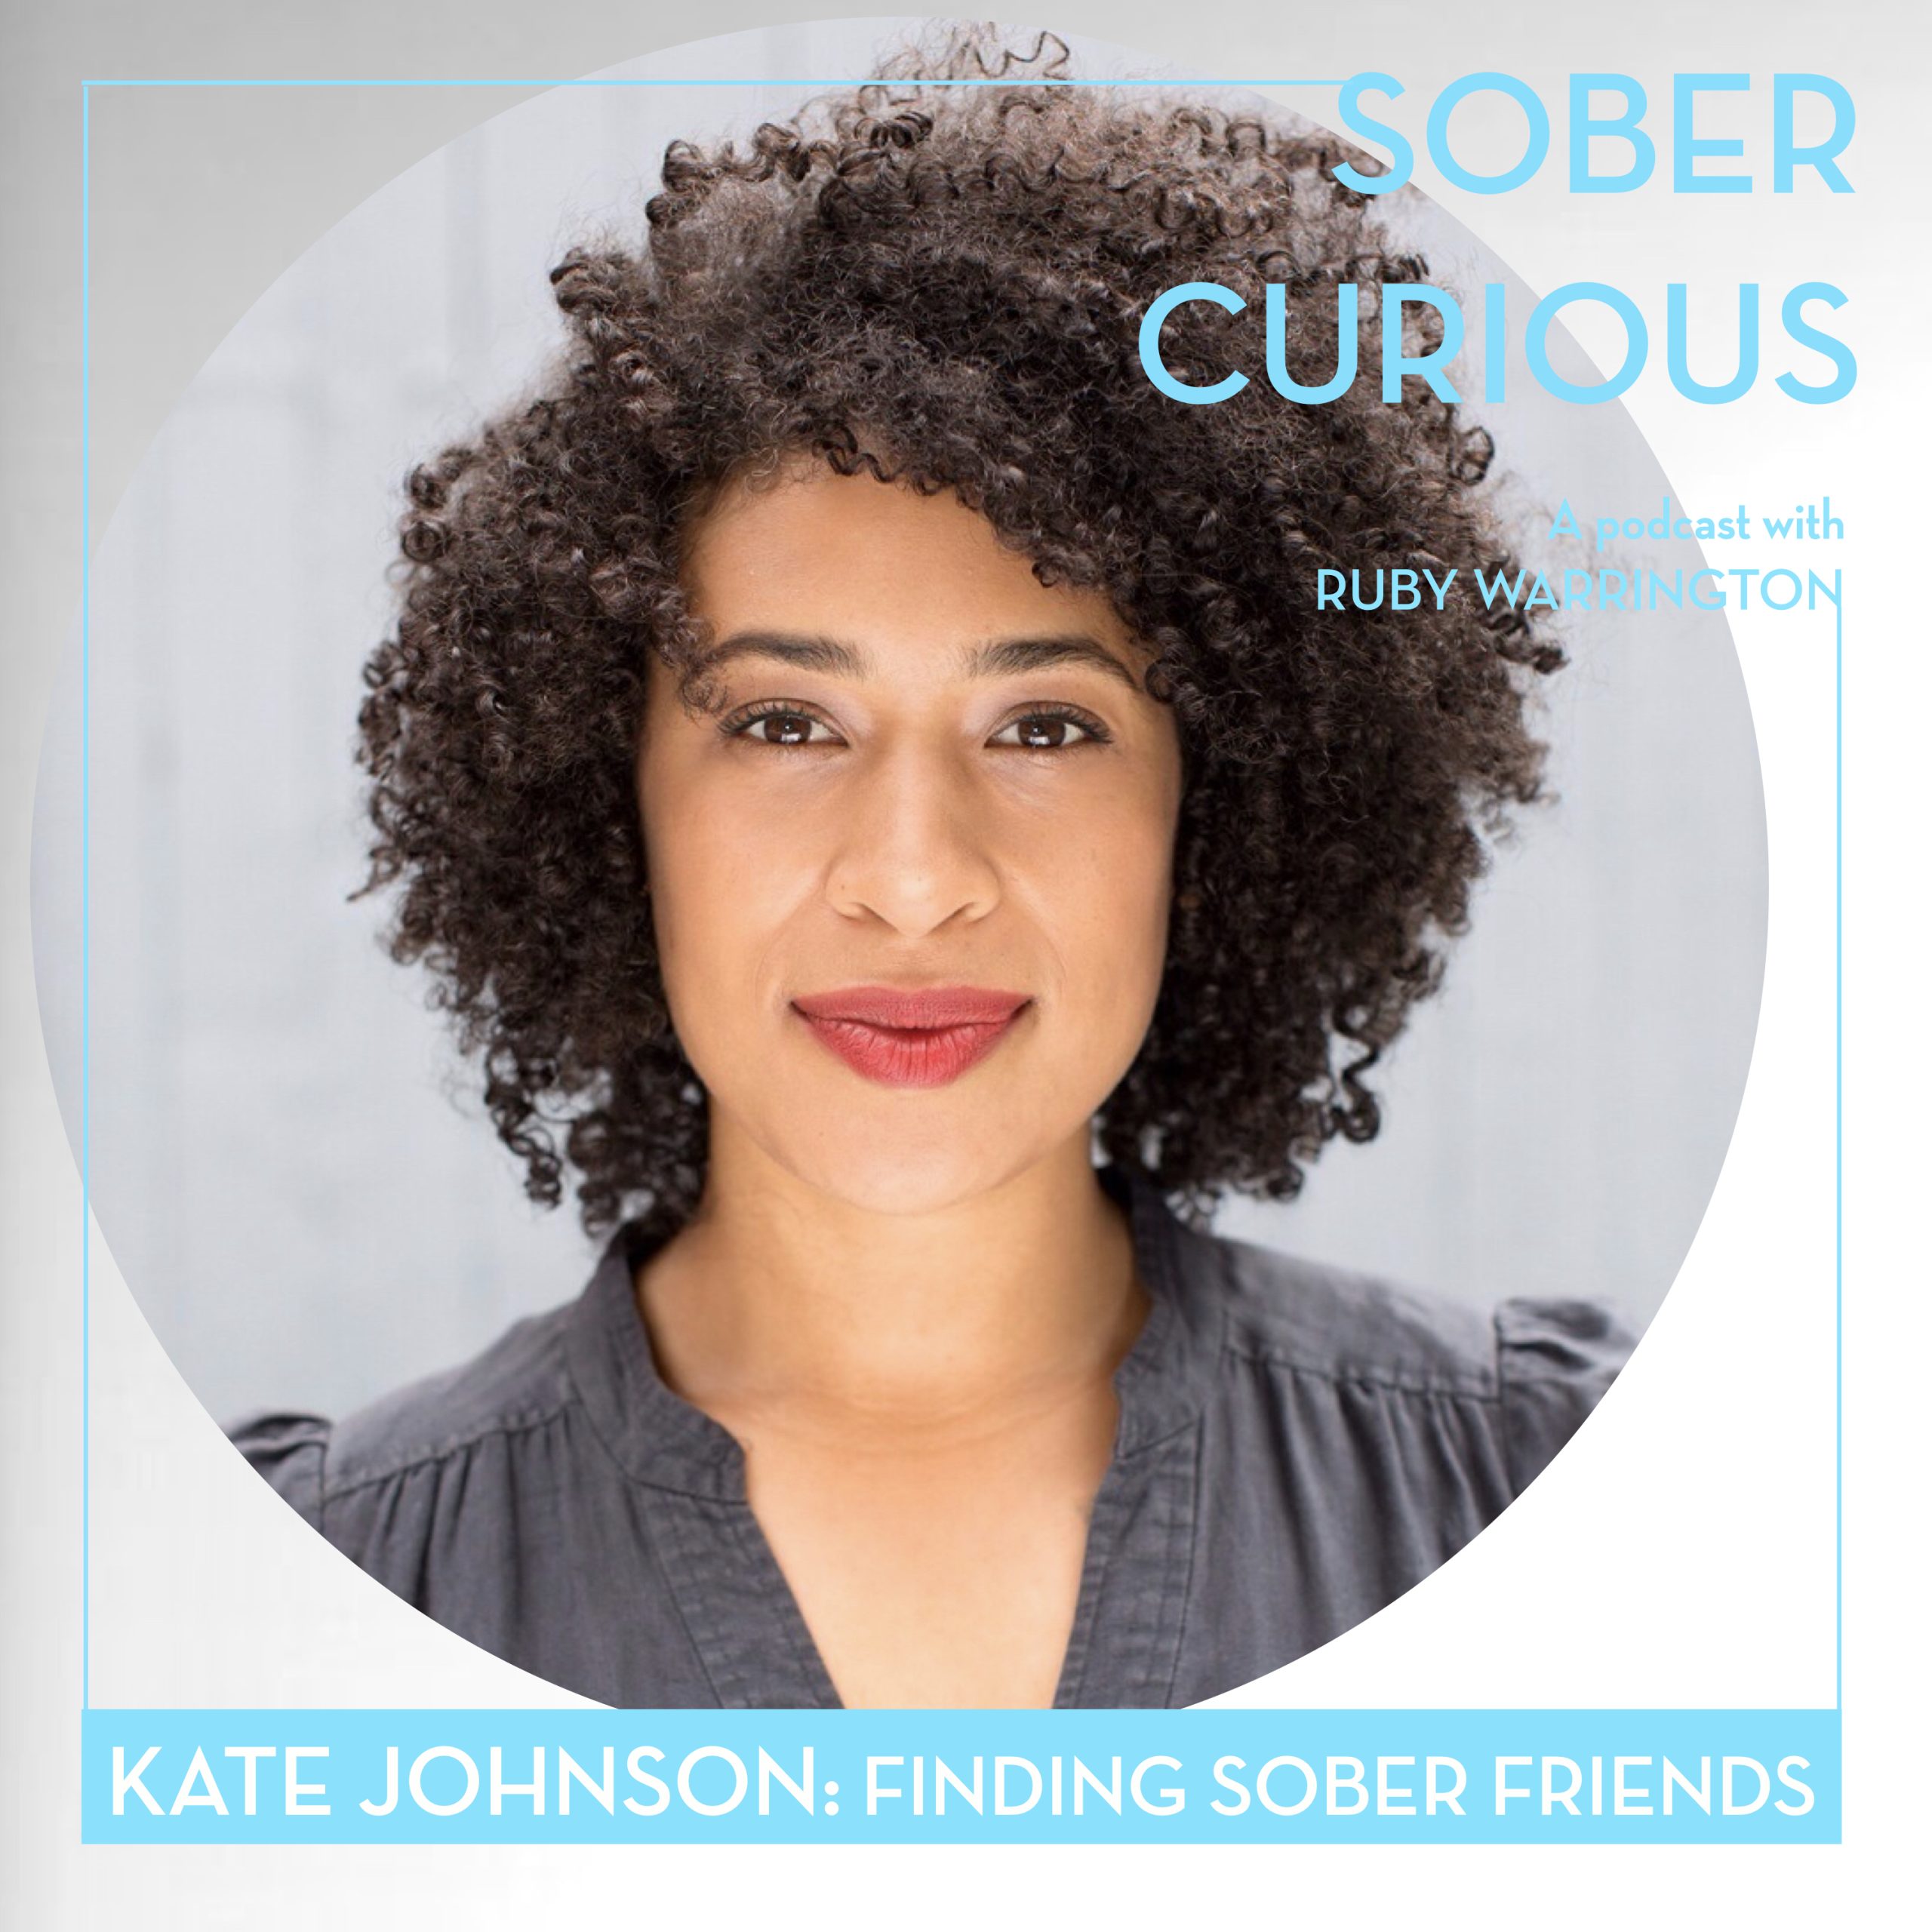 Kate Johnson sober curious podcast radical friendship ruby warrington